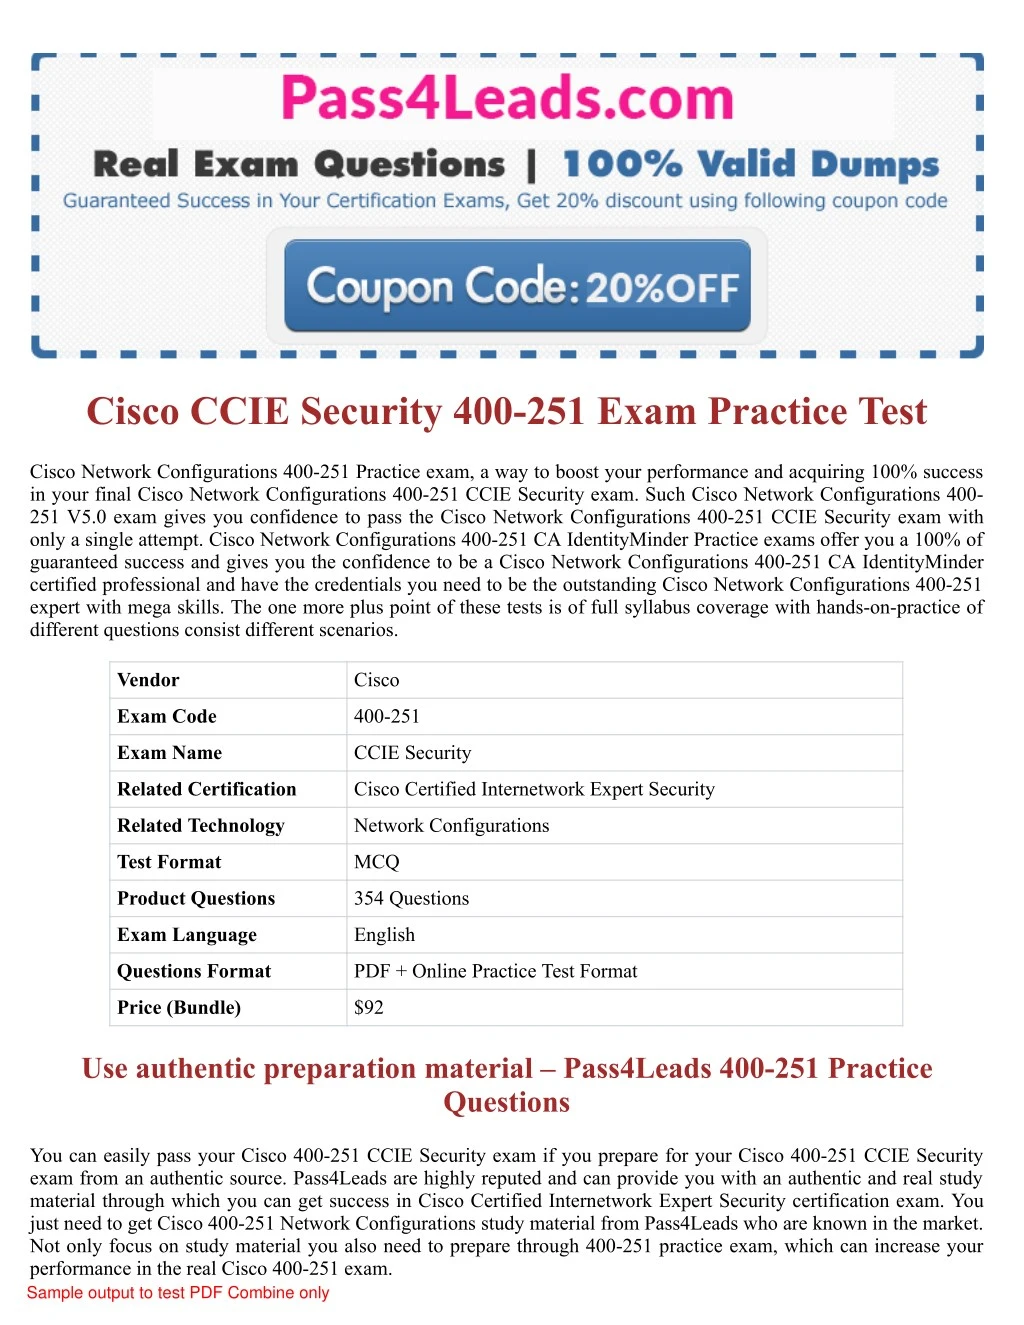 cisco ccie security 400 251 exam practice test